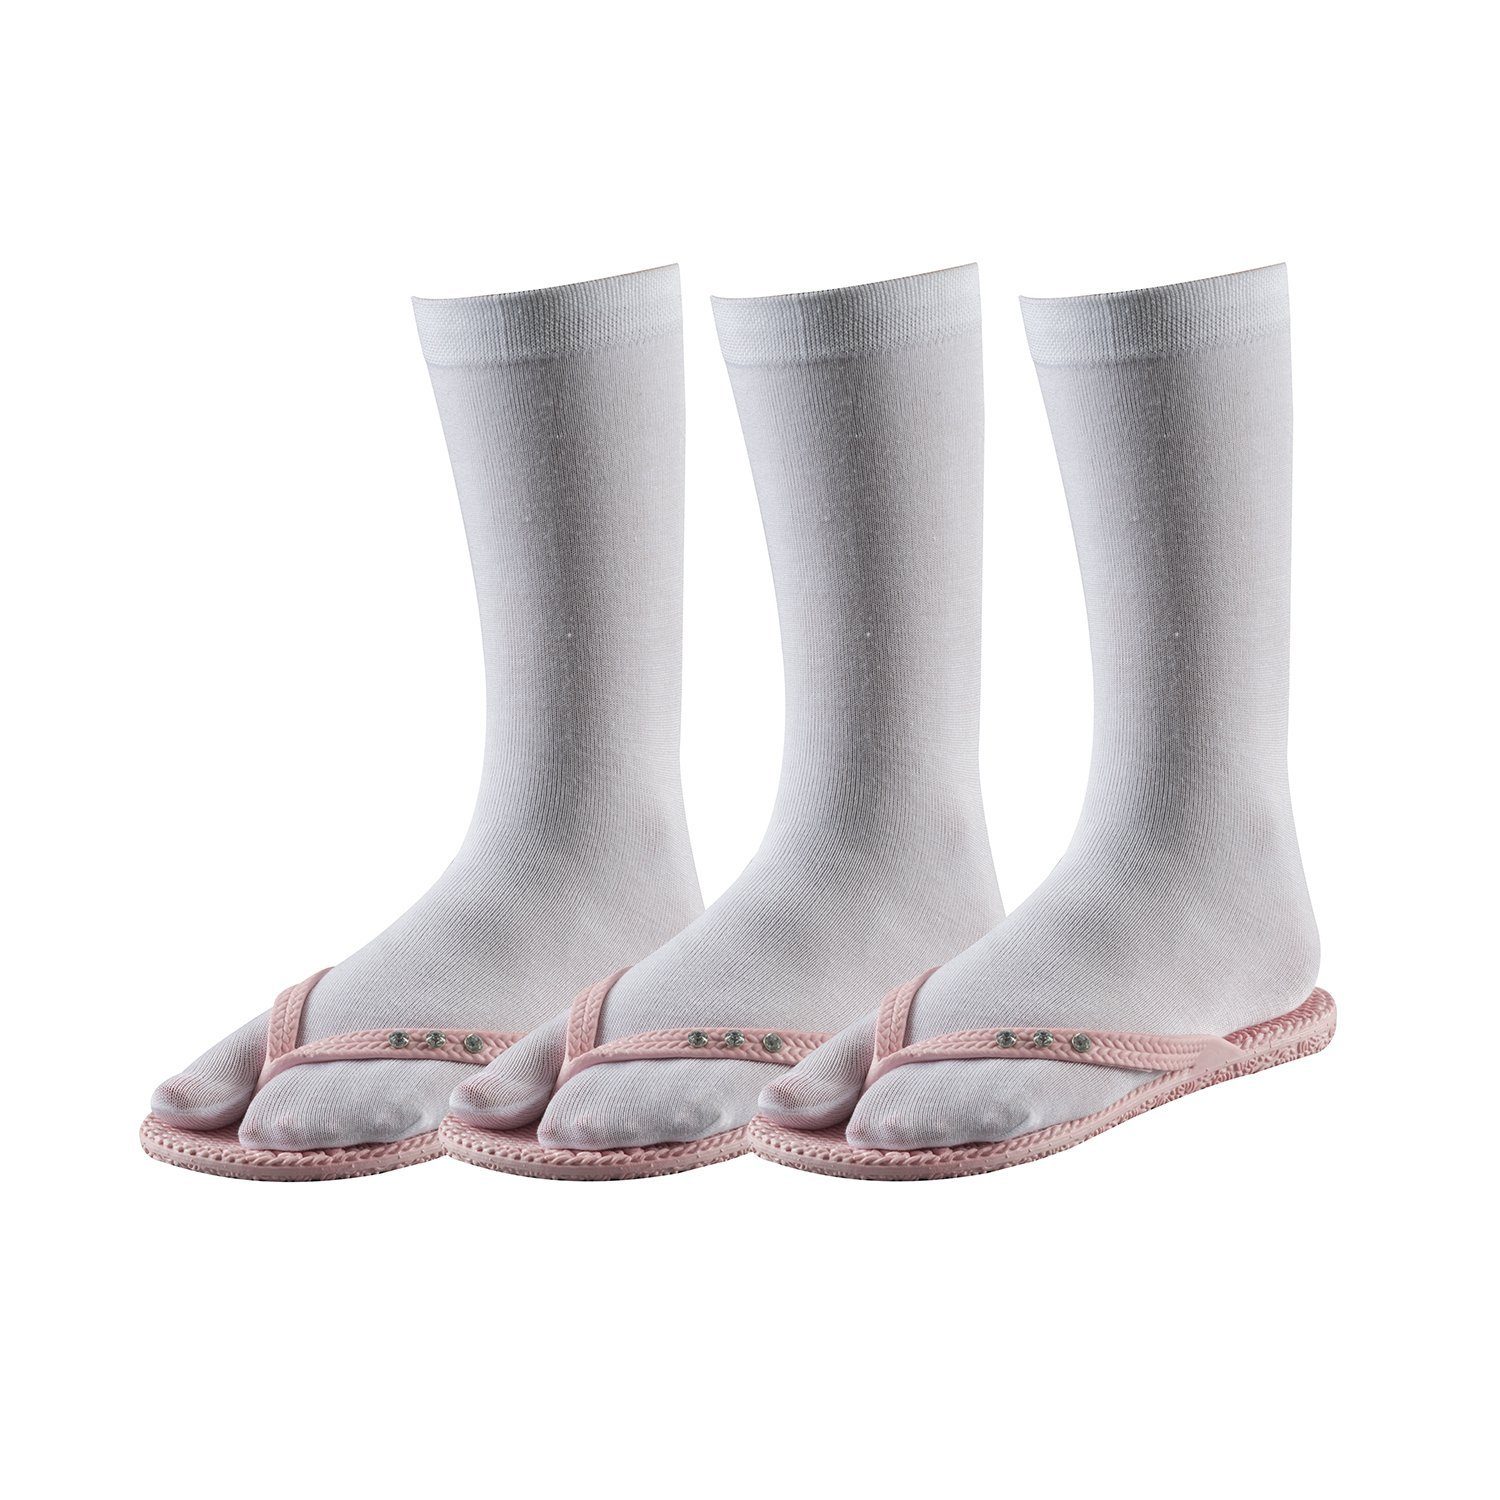 FussFreunde Zehensocken 3 Paar Zwei-Zehen-Socken, Bambussocken, Sandalen-Socken, Tabi Socken Weiß